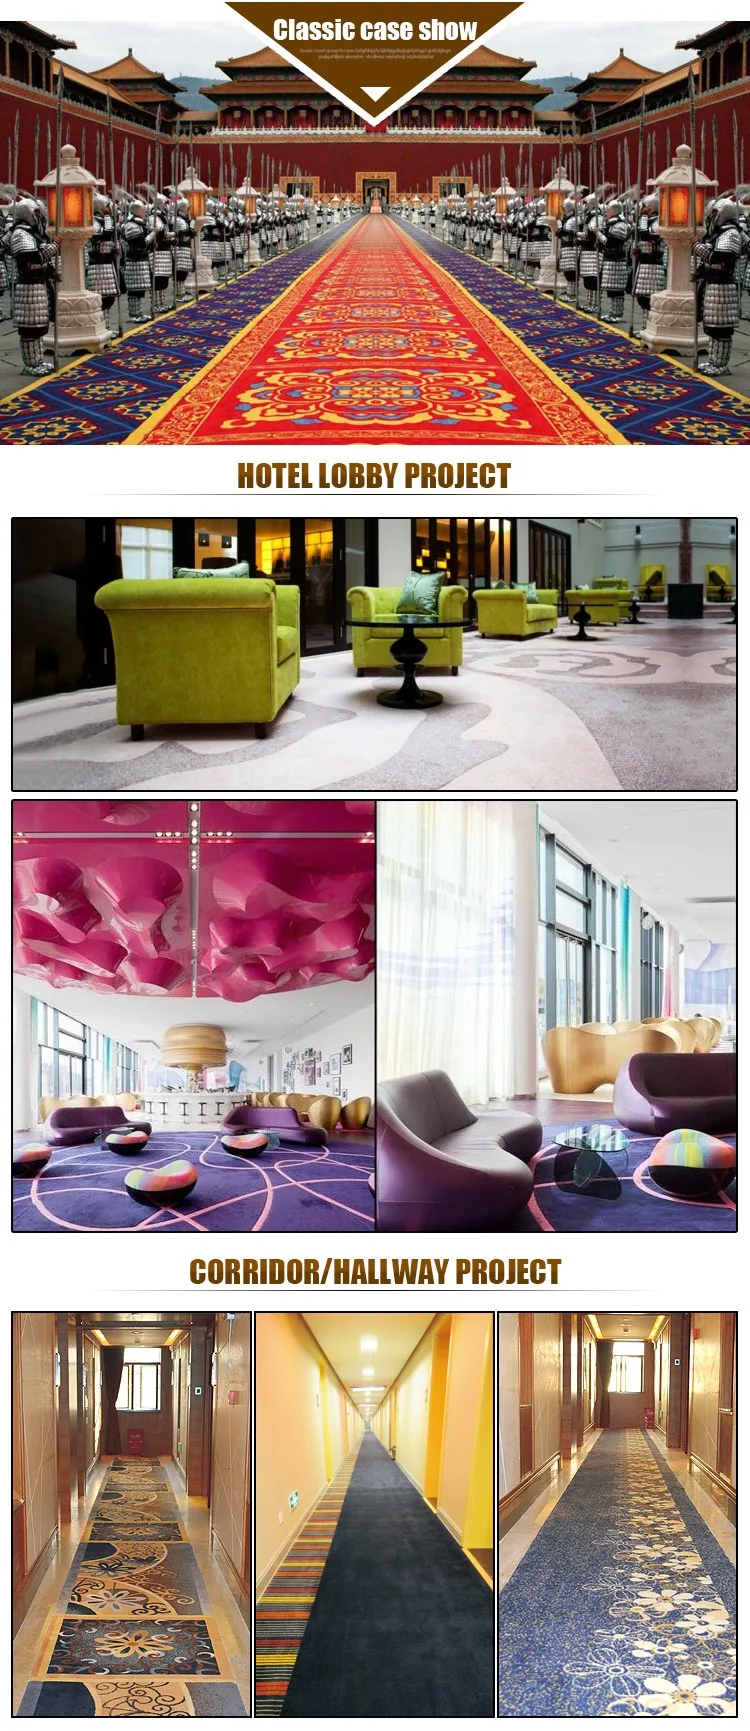 China Carpet Manufacturer Loop Pile Technics Nylon Printed Carpet Use To The Hotel